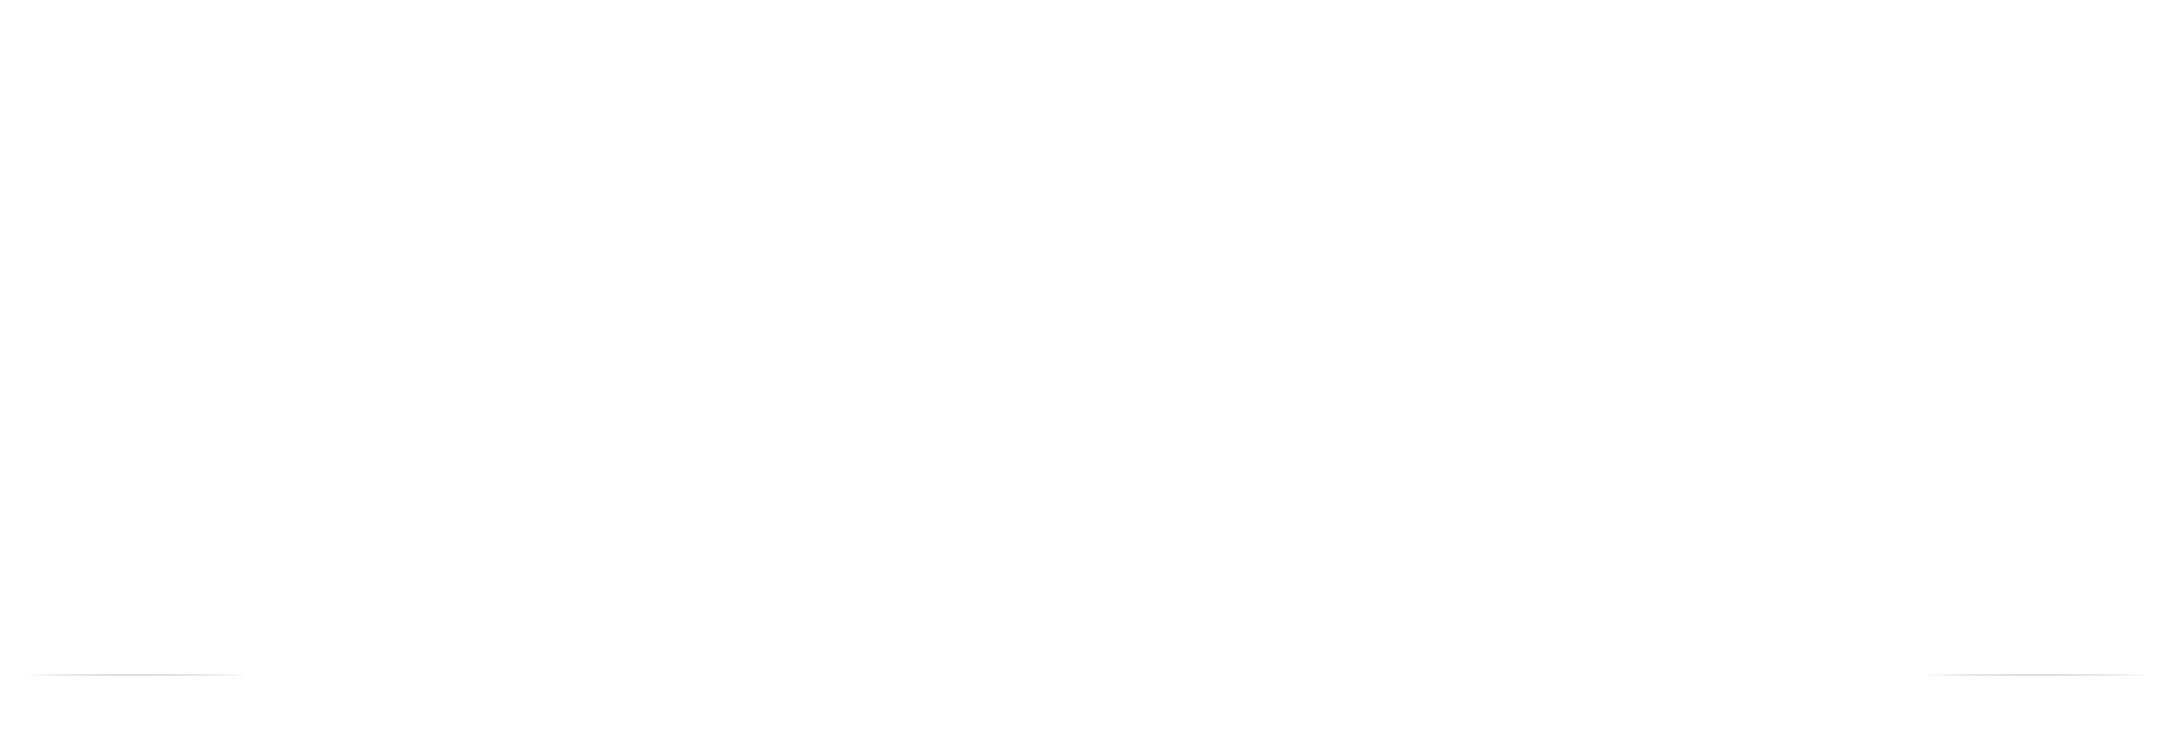 BRIGHT ゴルフスタジオ・ブライト GRAND OPEN 2024.4.6(Sat) AM 9:00